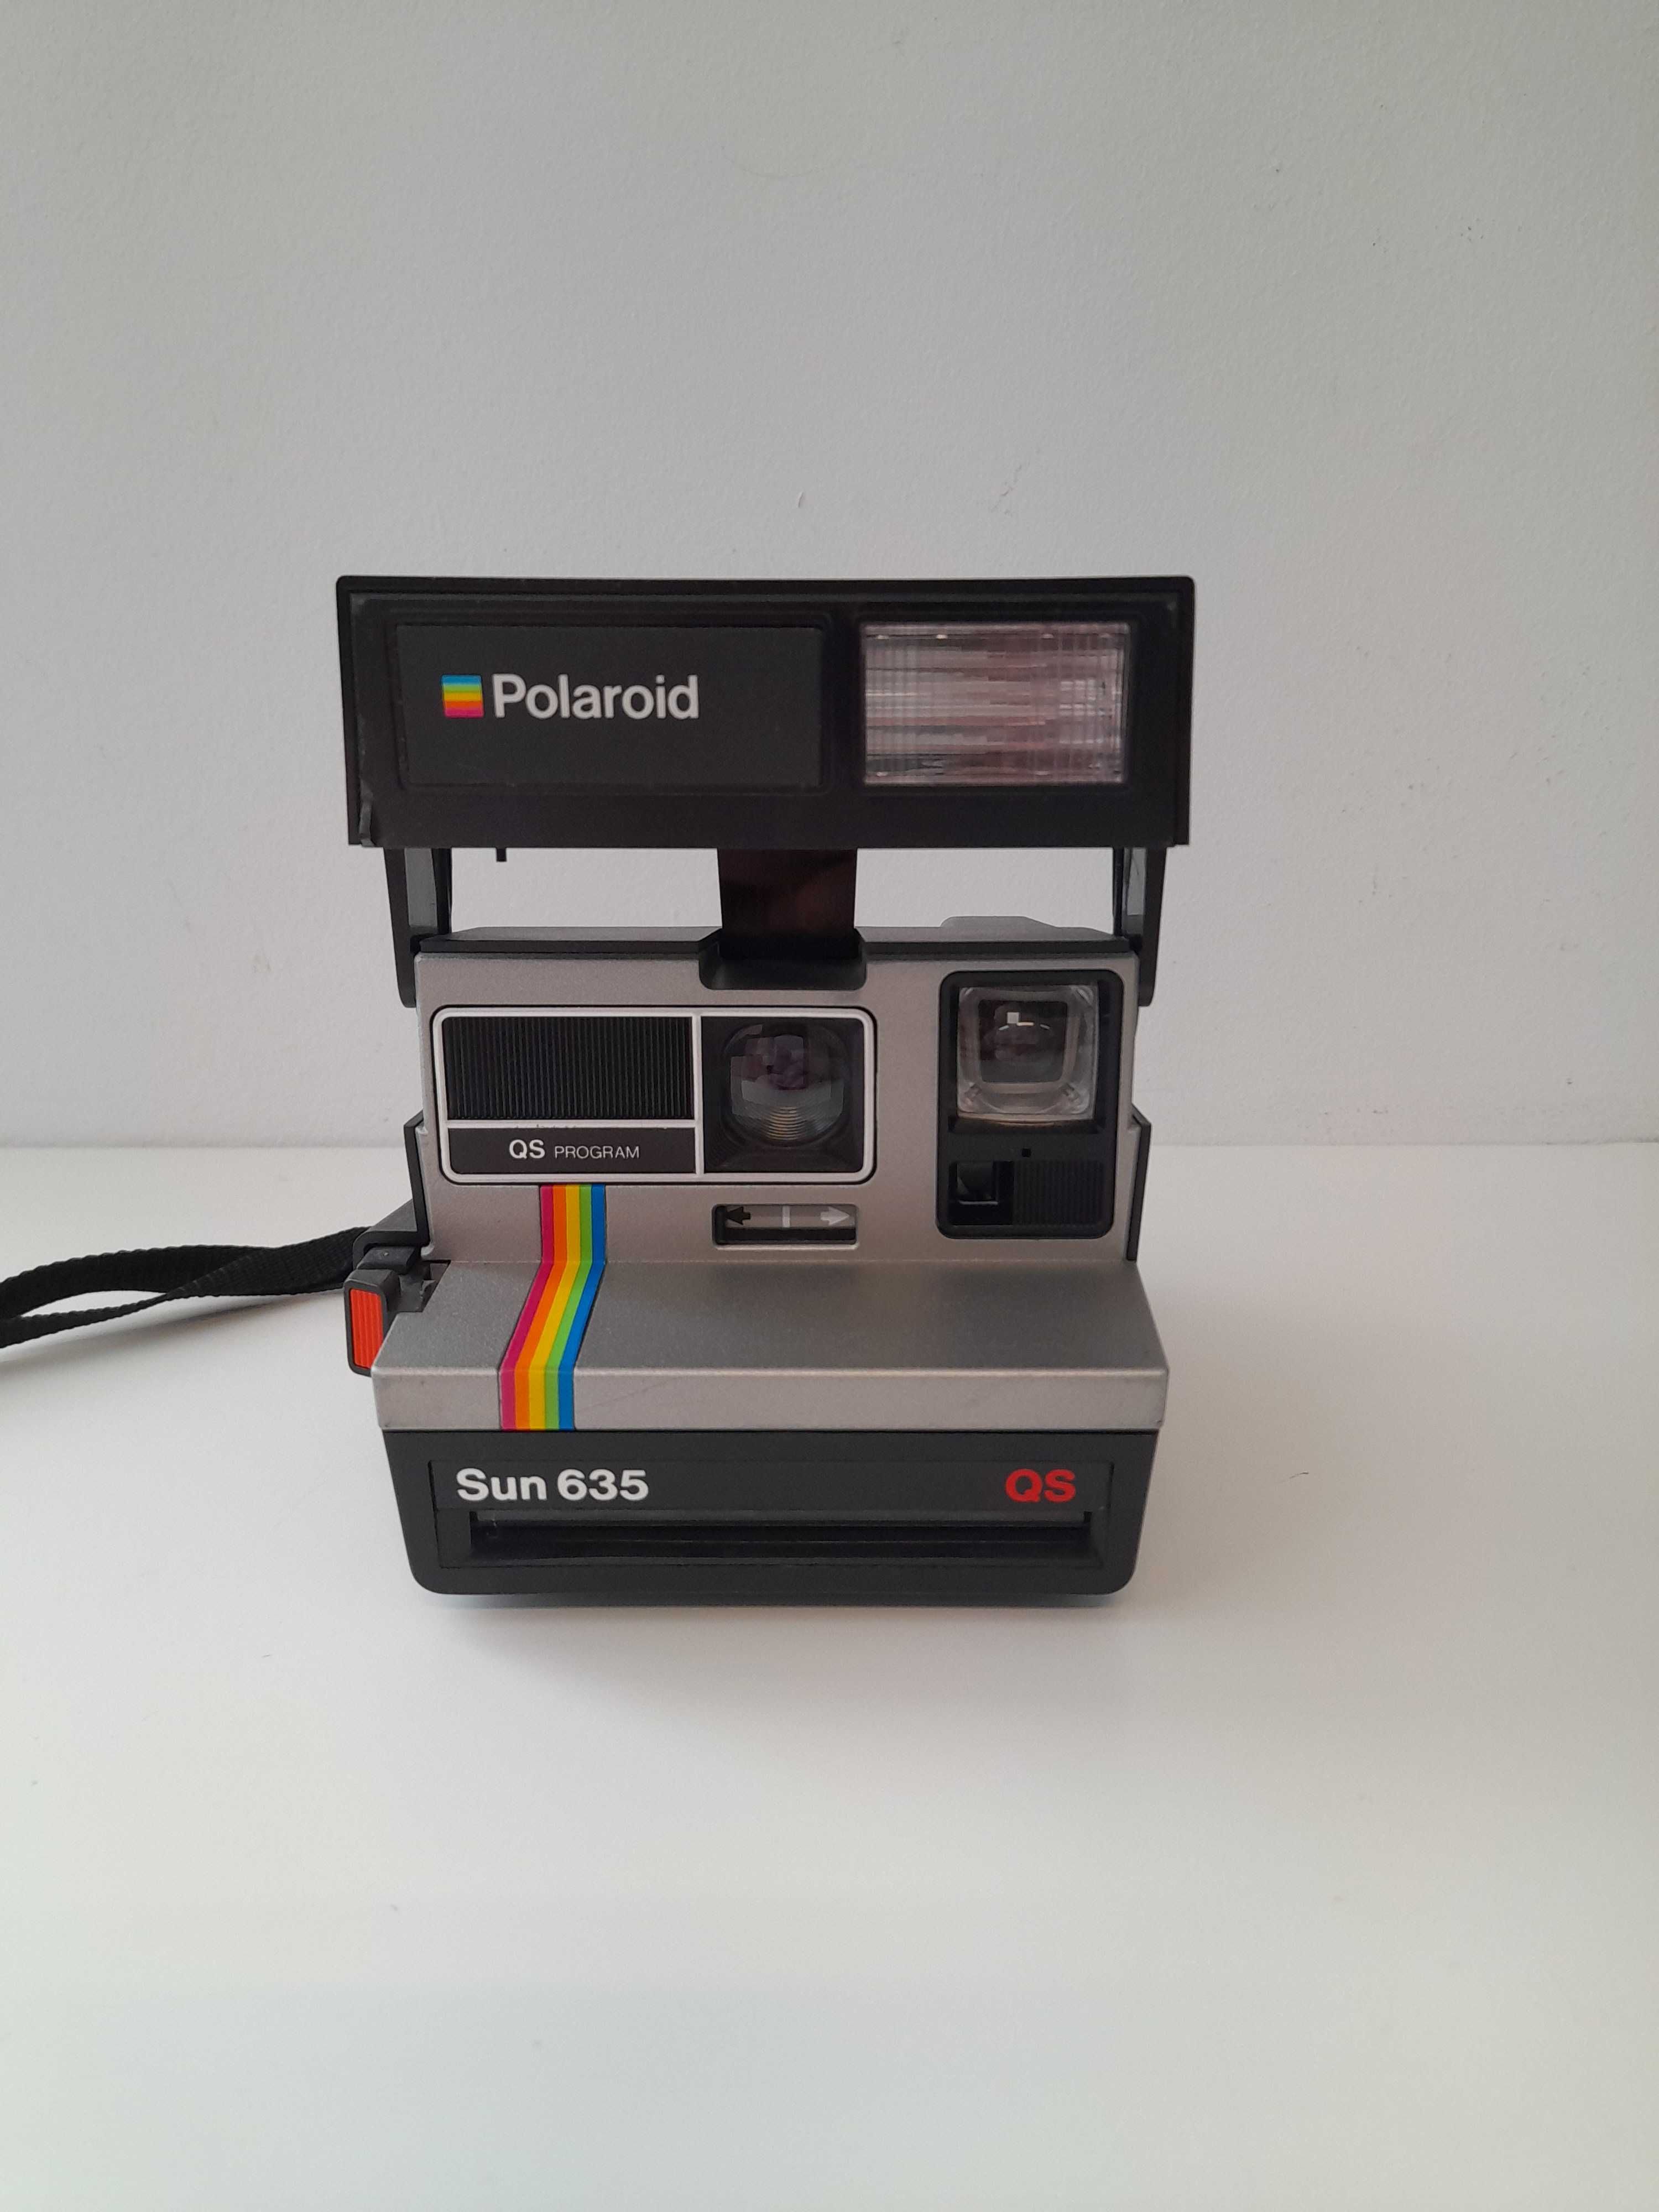 Polaroid sun 635 QS aparat, vintage.